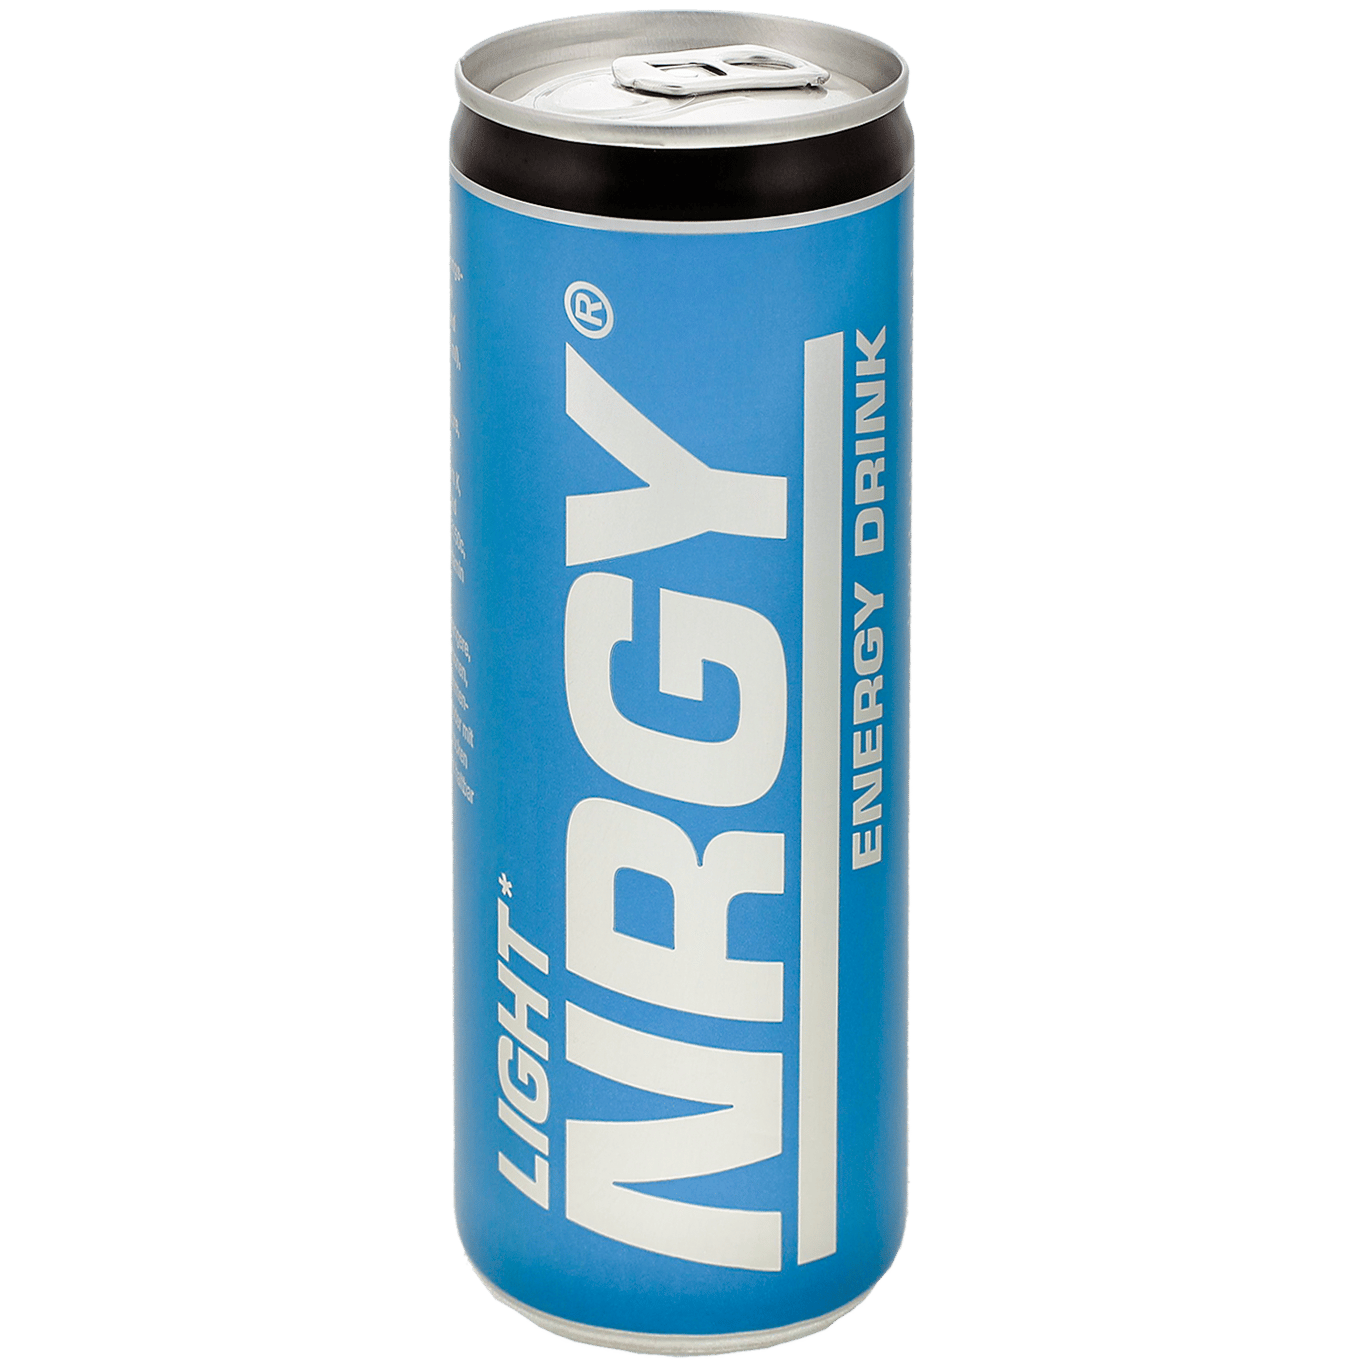 Nrgy Energy-Drink Light